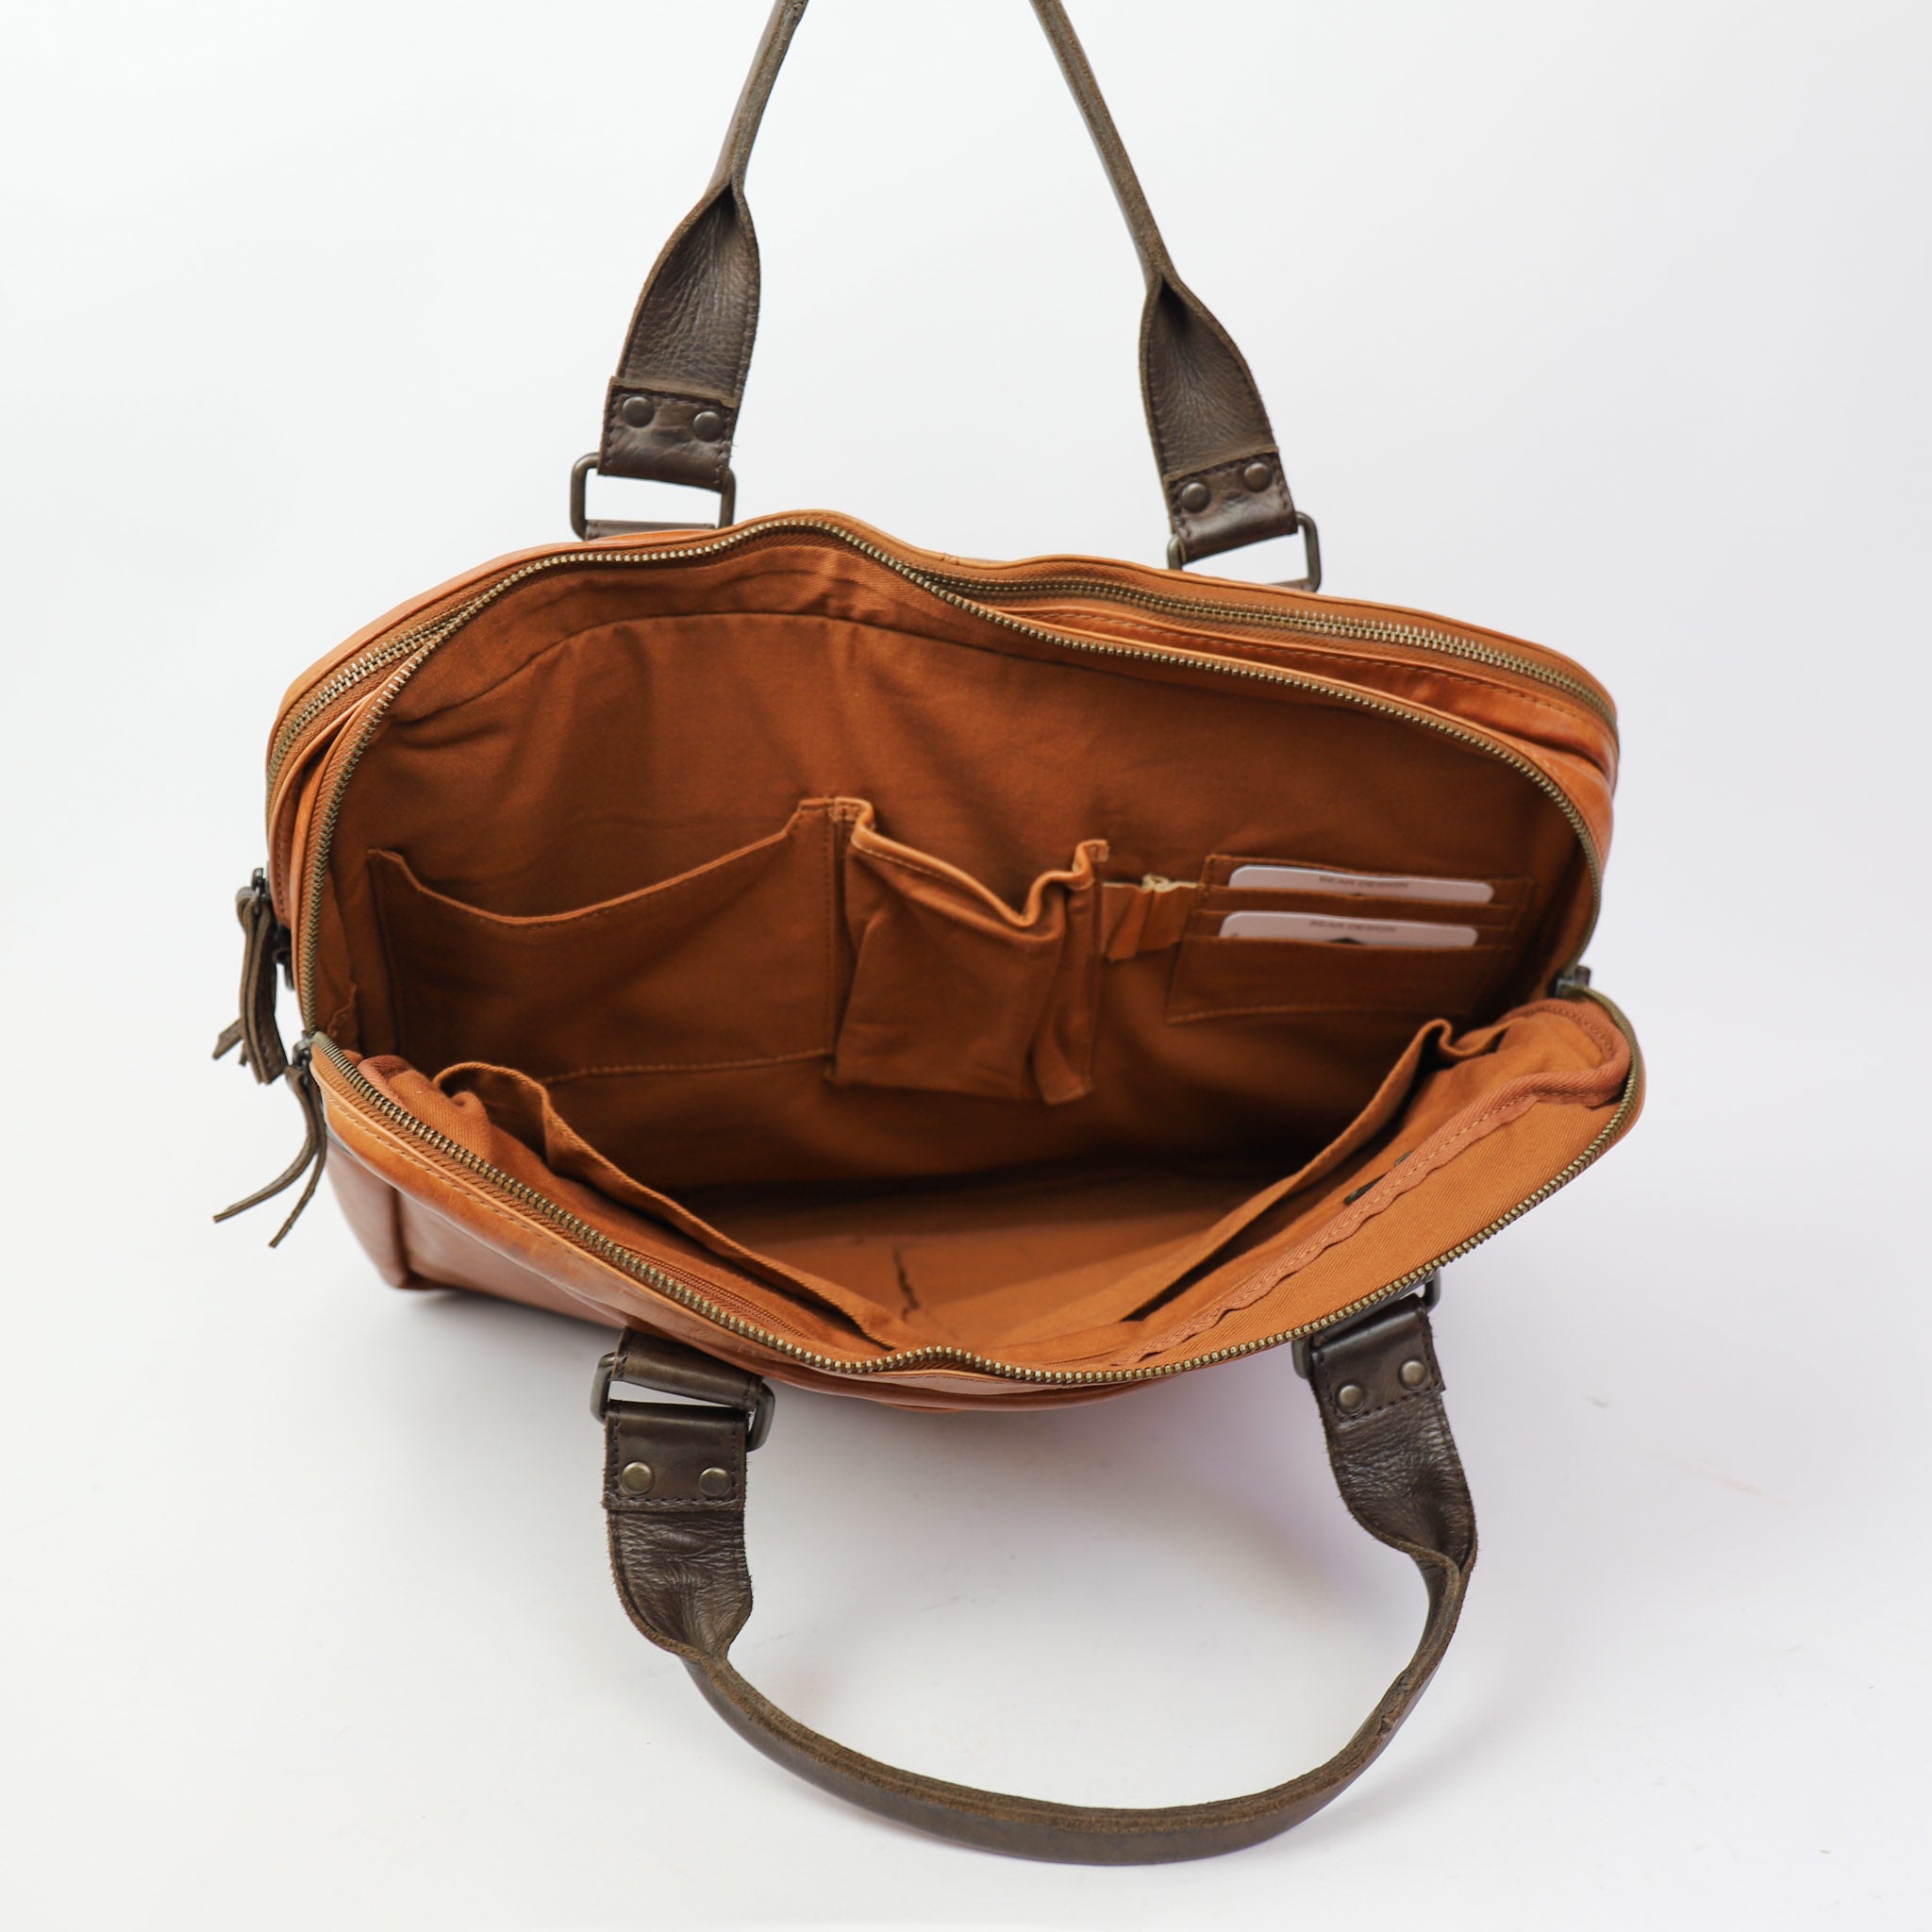 Laptop bag 'Leandro' cognac/dark brown - CL 32843